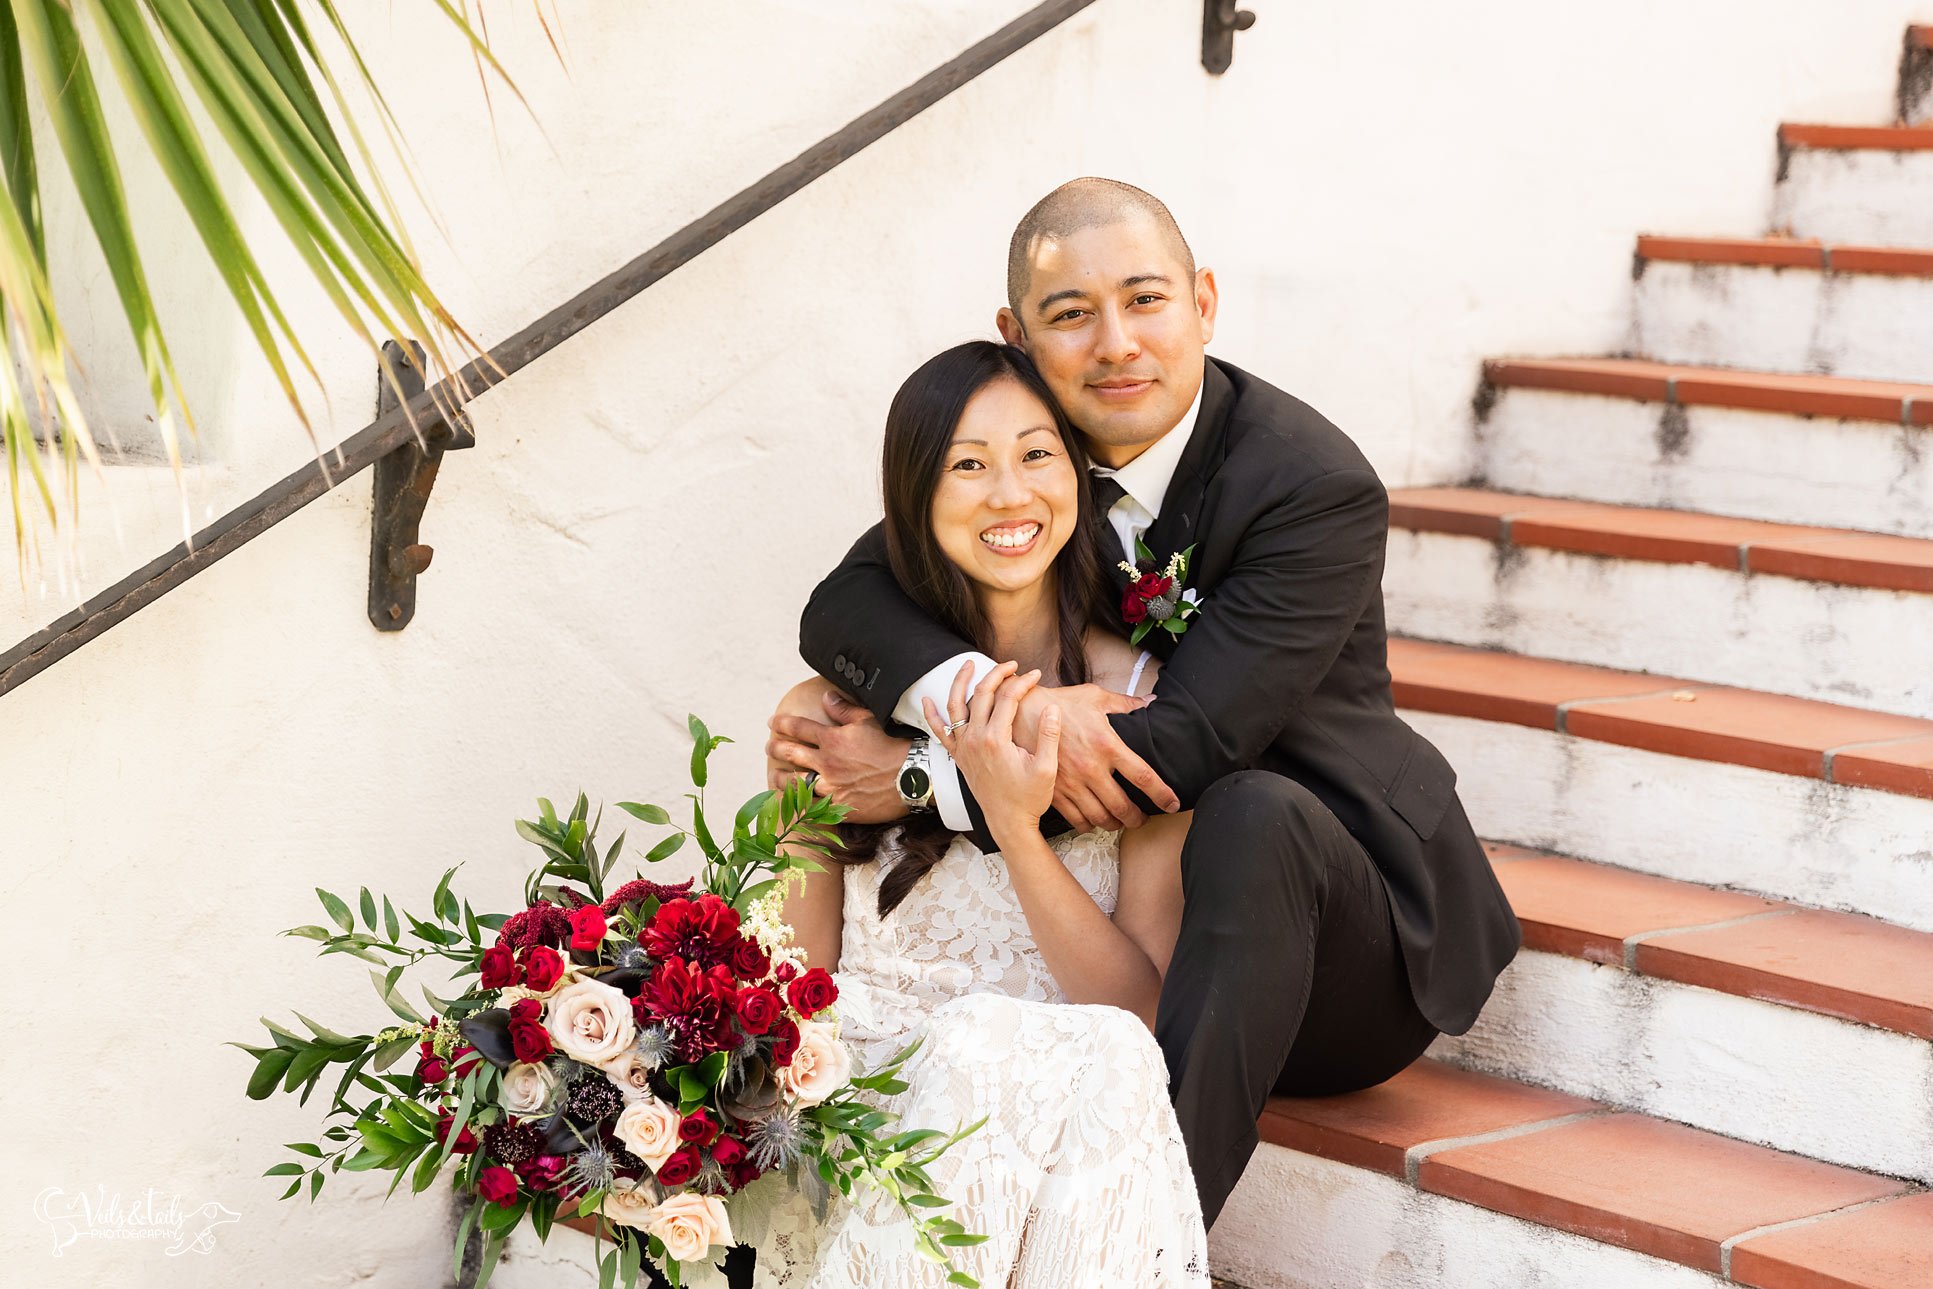 Santa Barbara wedding photographer and florals